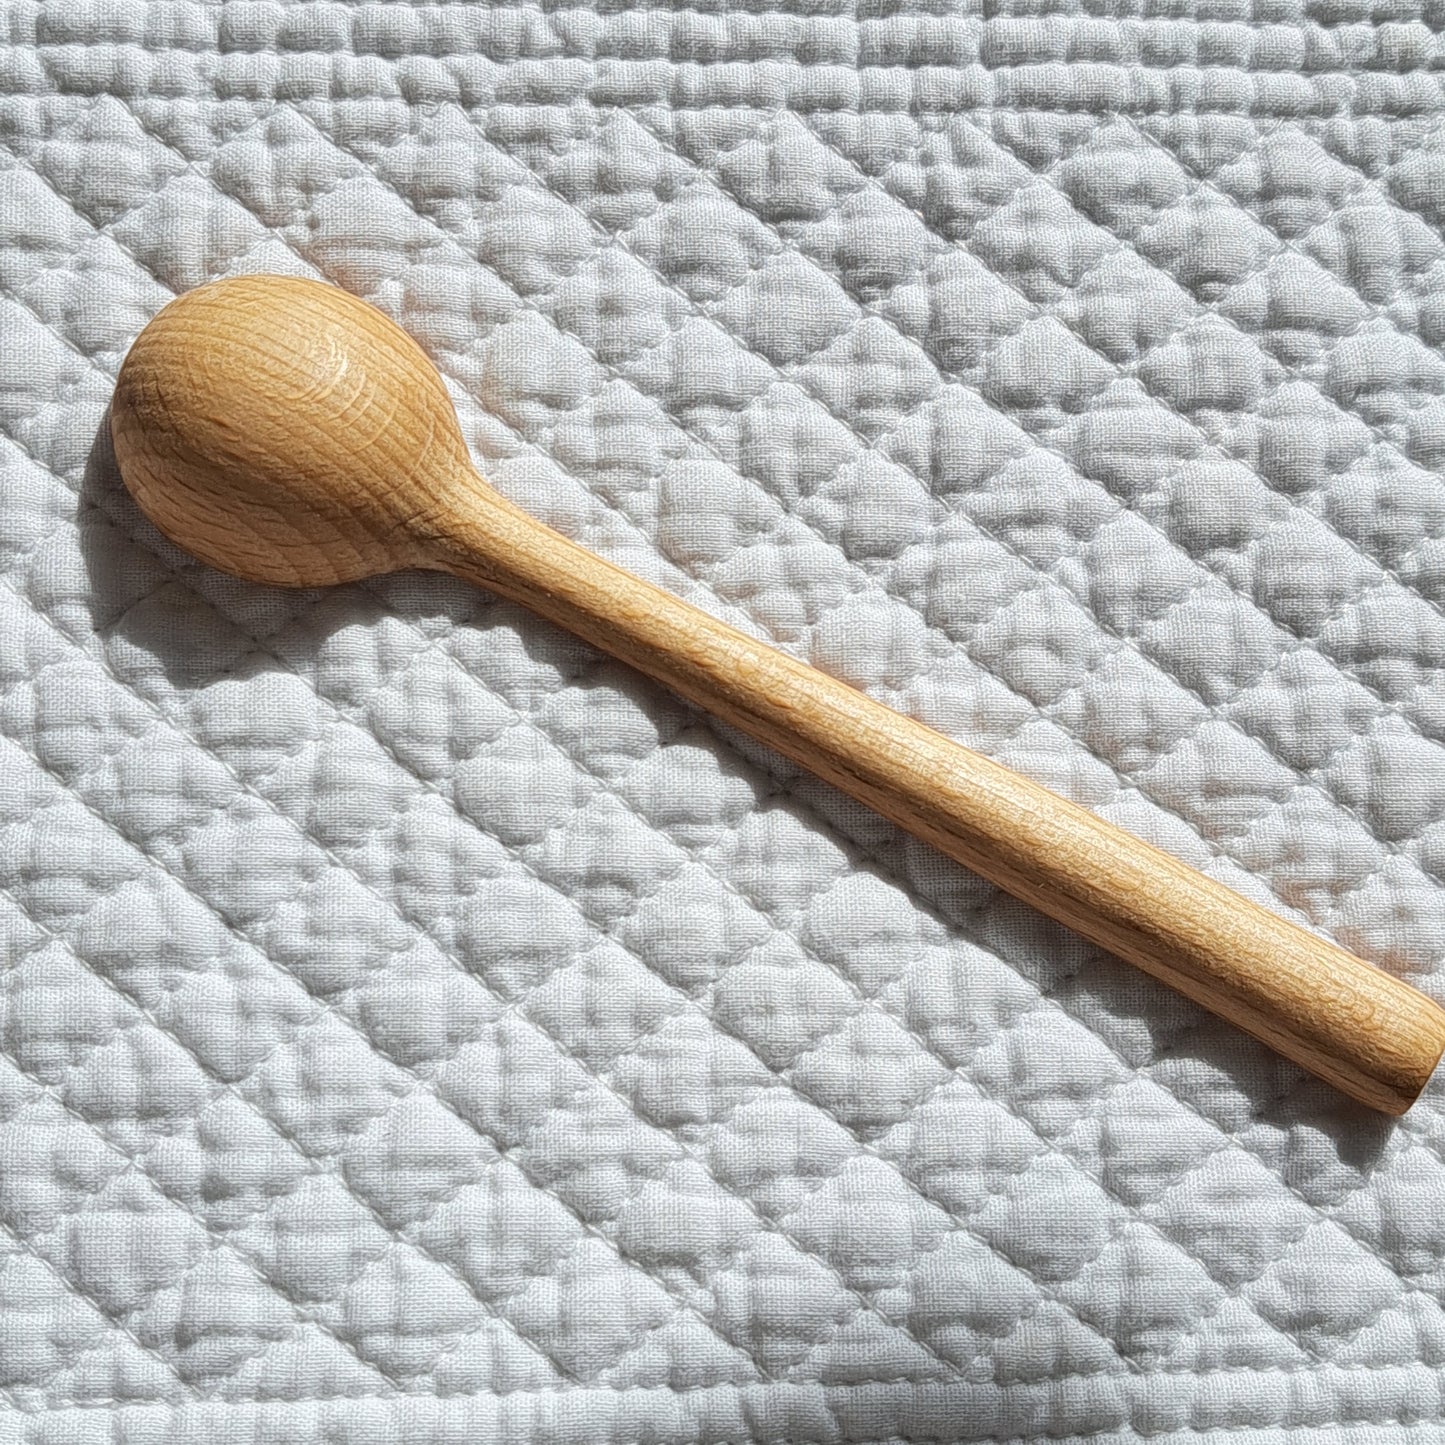 14cm wooden spoon